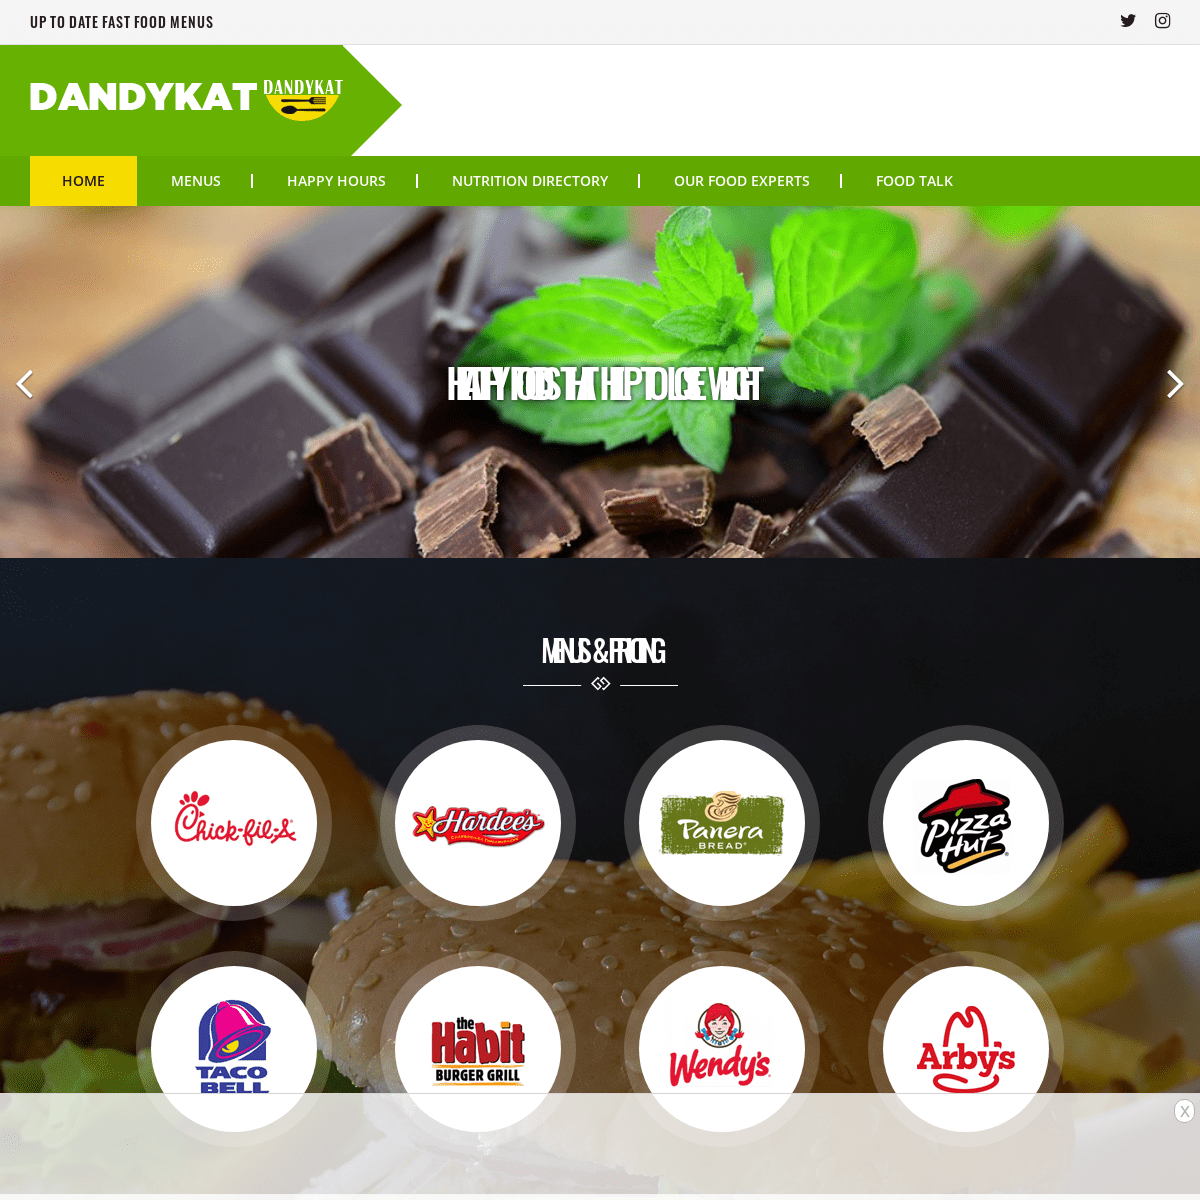 A complete backup of dandykat.com